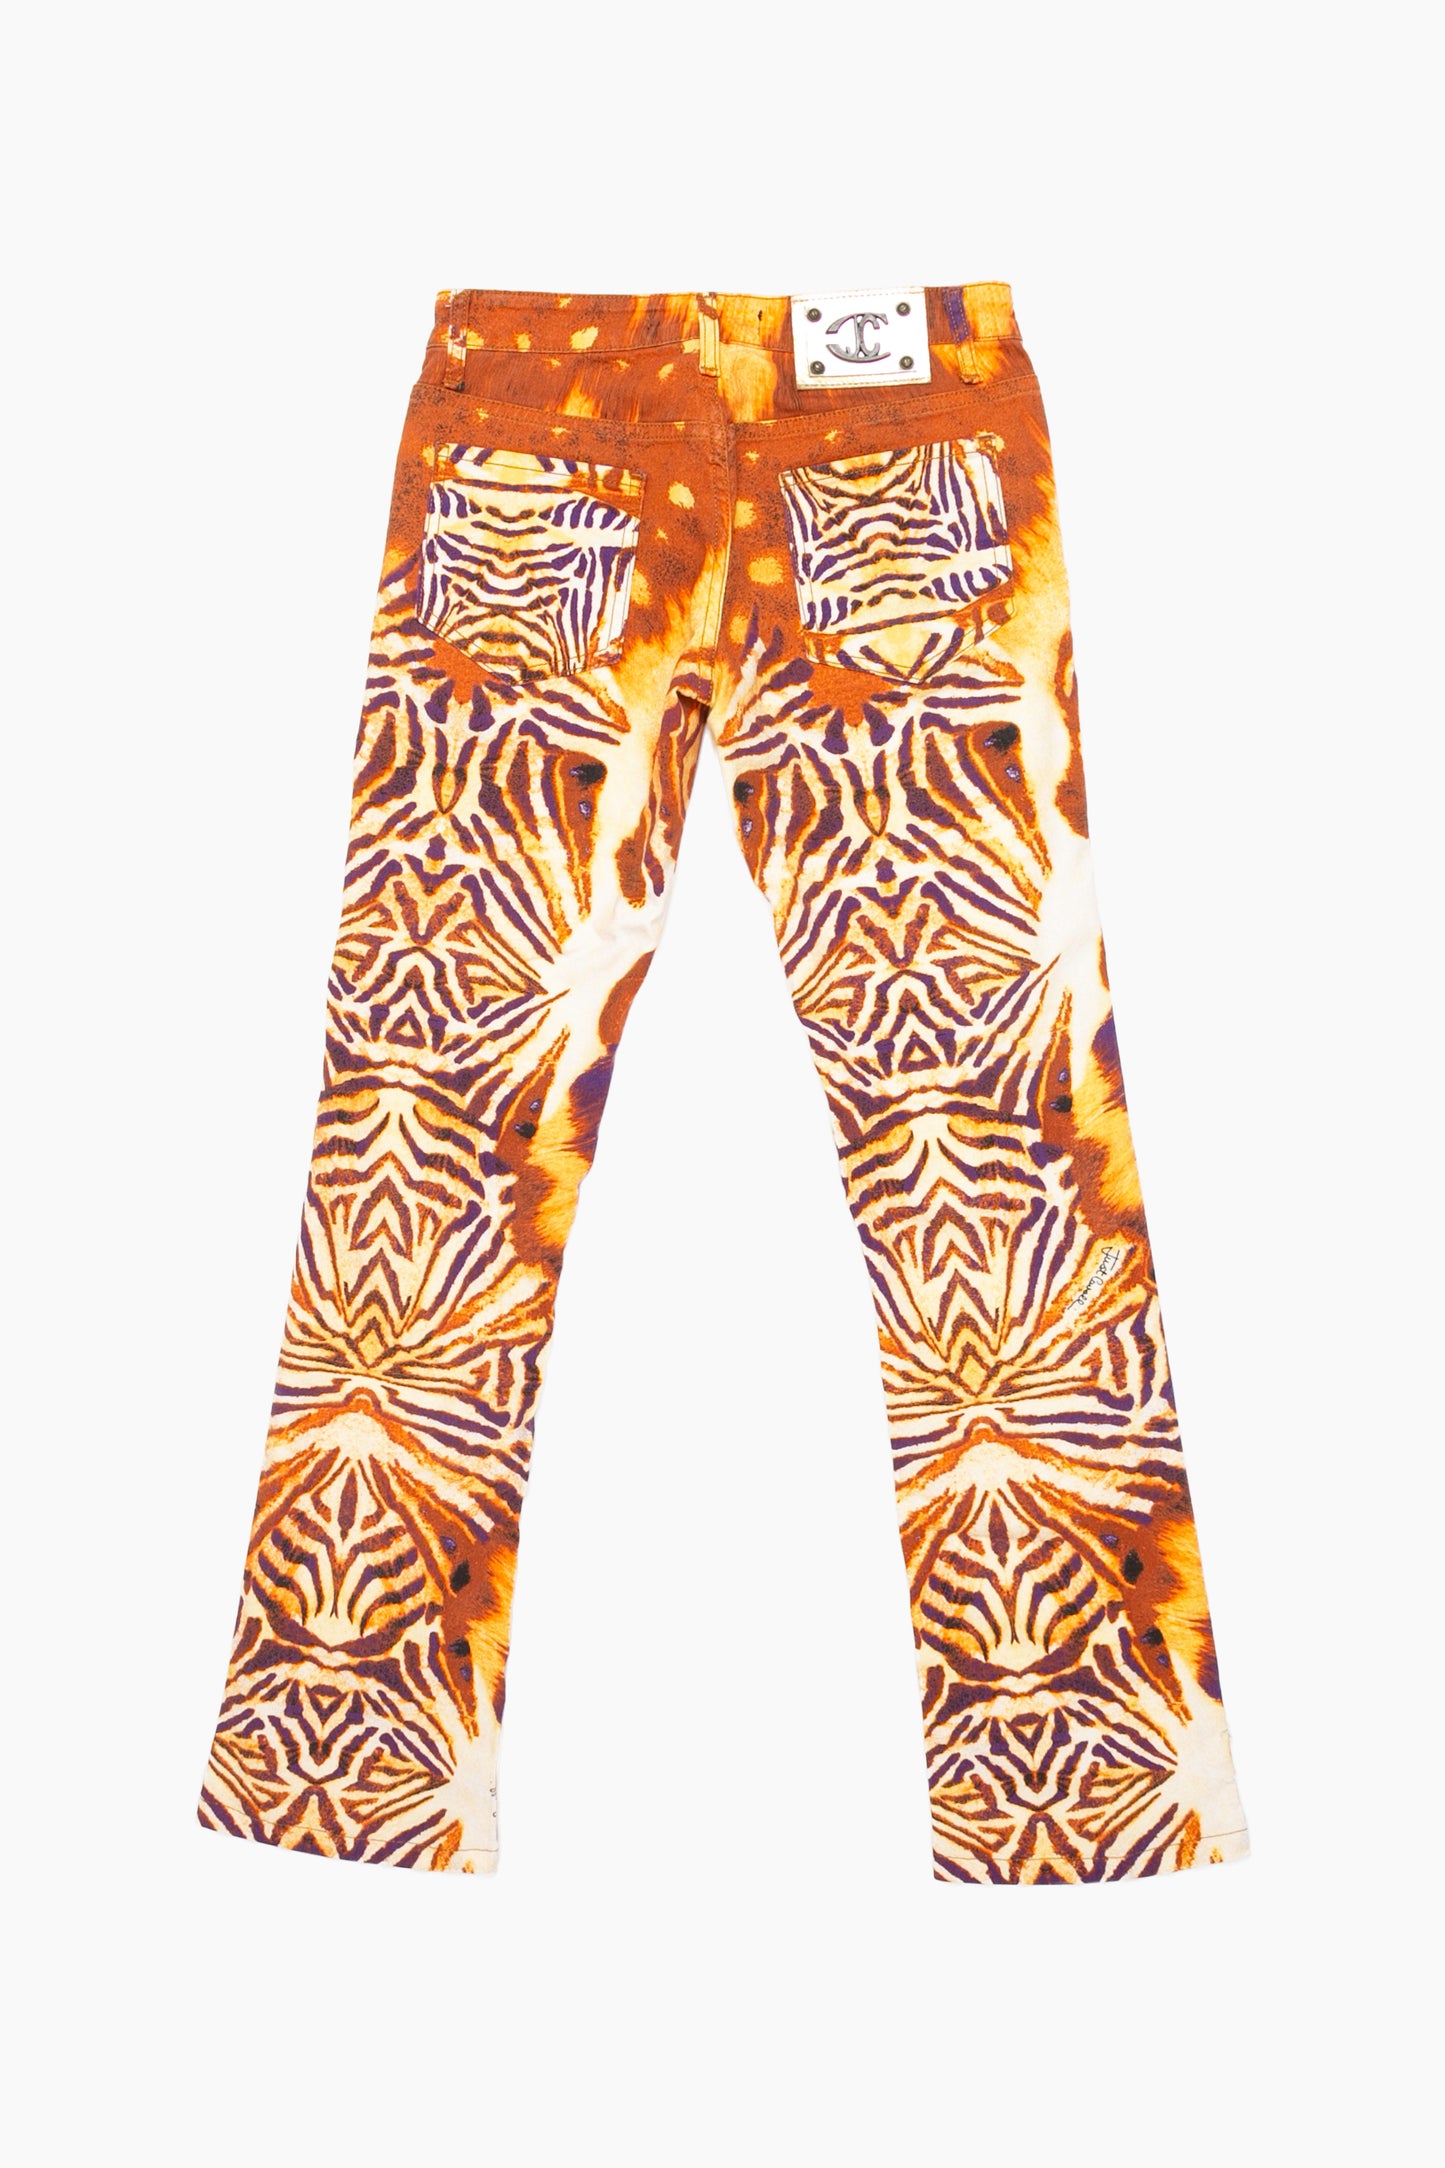 Roberto Cavalli Fire Zebra Pants